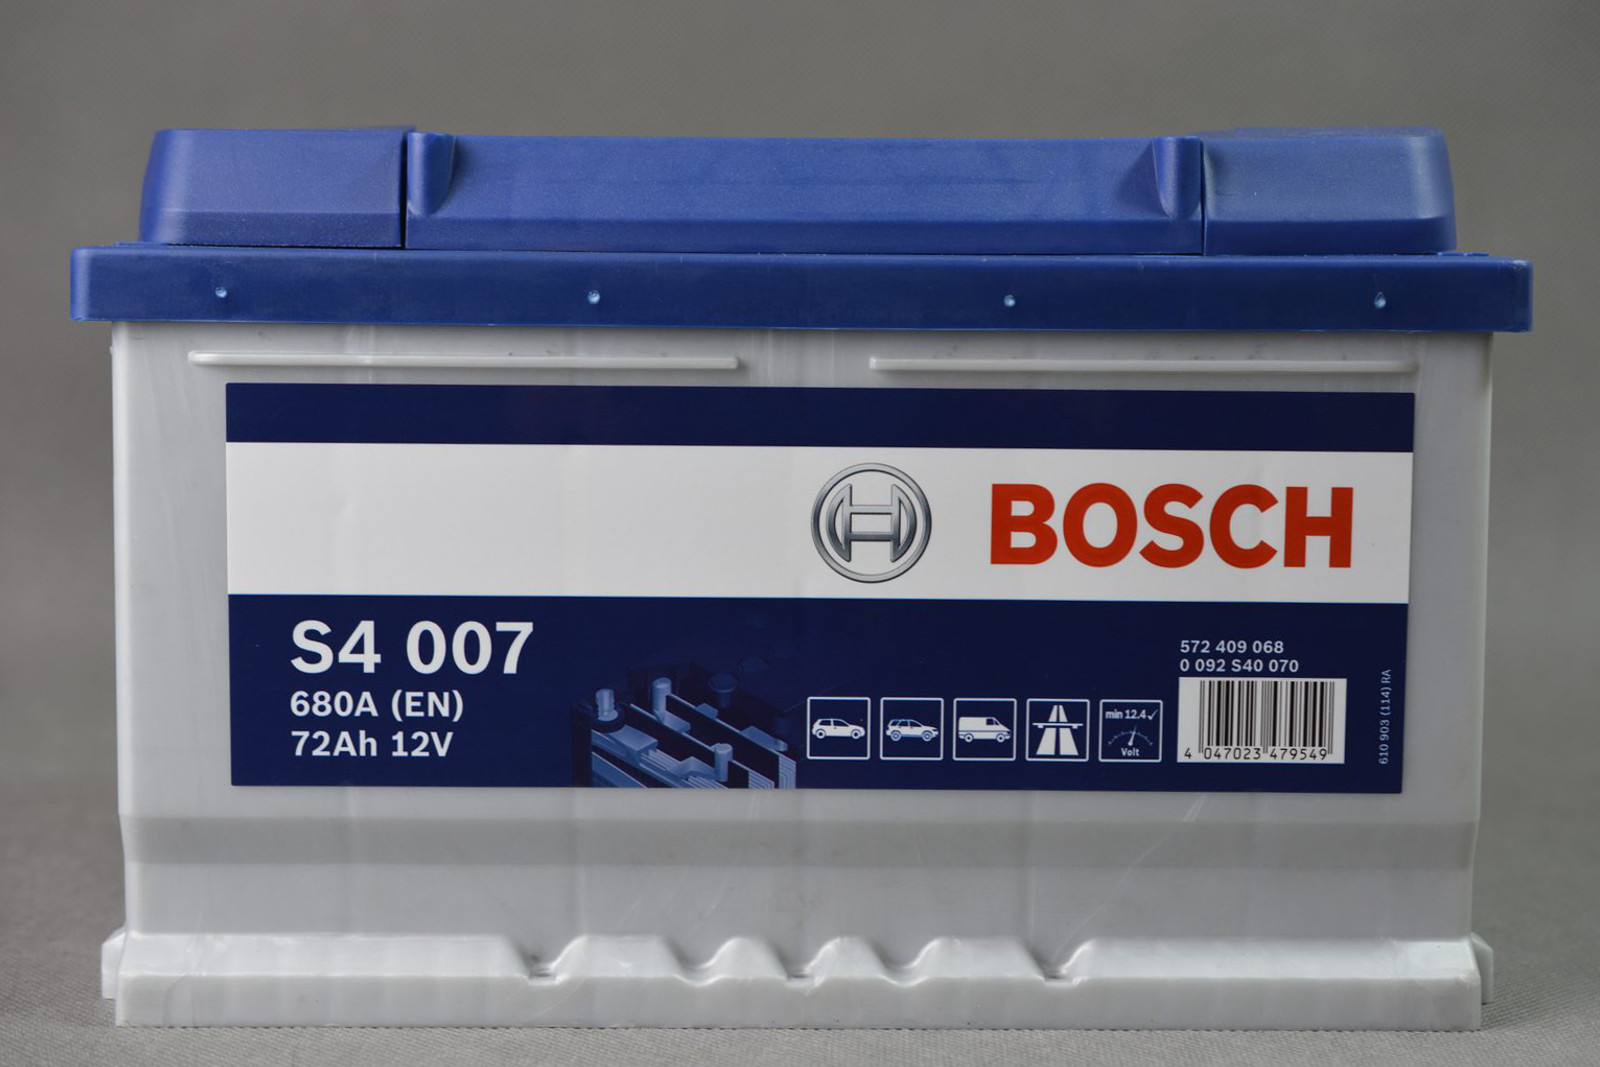 Autobatéria Bosch S4 12V 72Ah 680A 0 092 S40 070